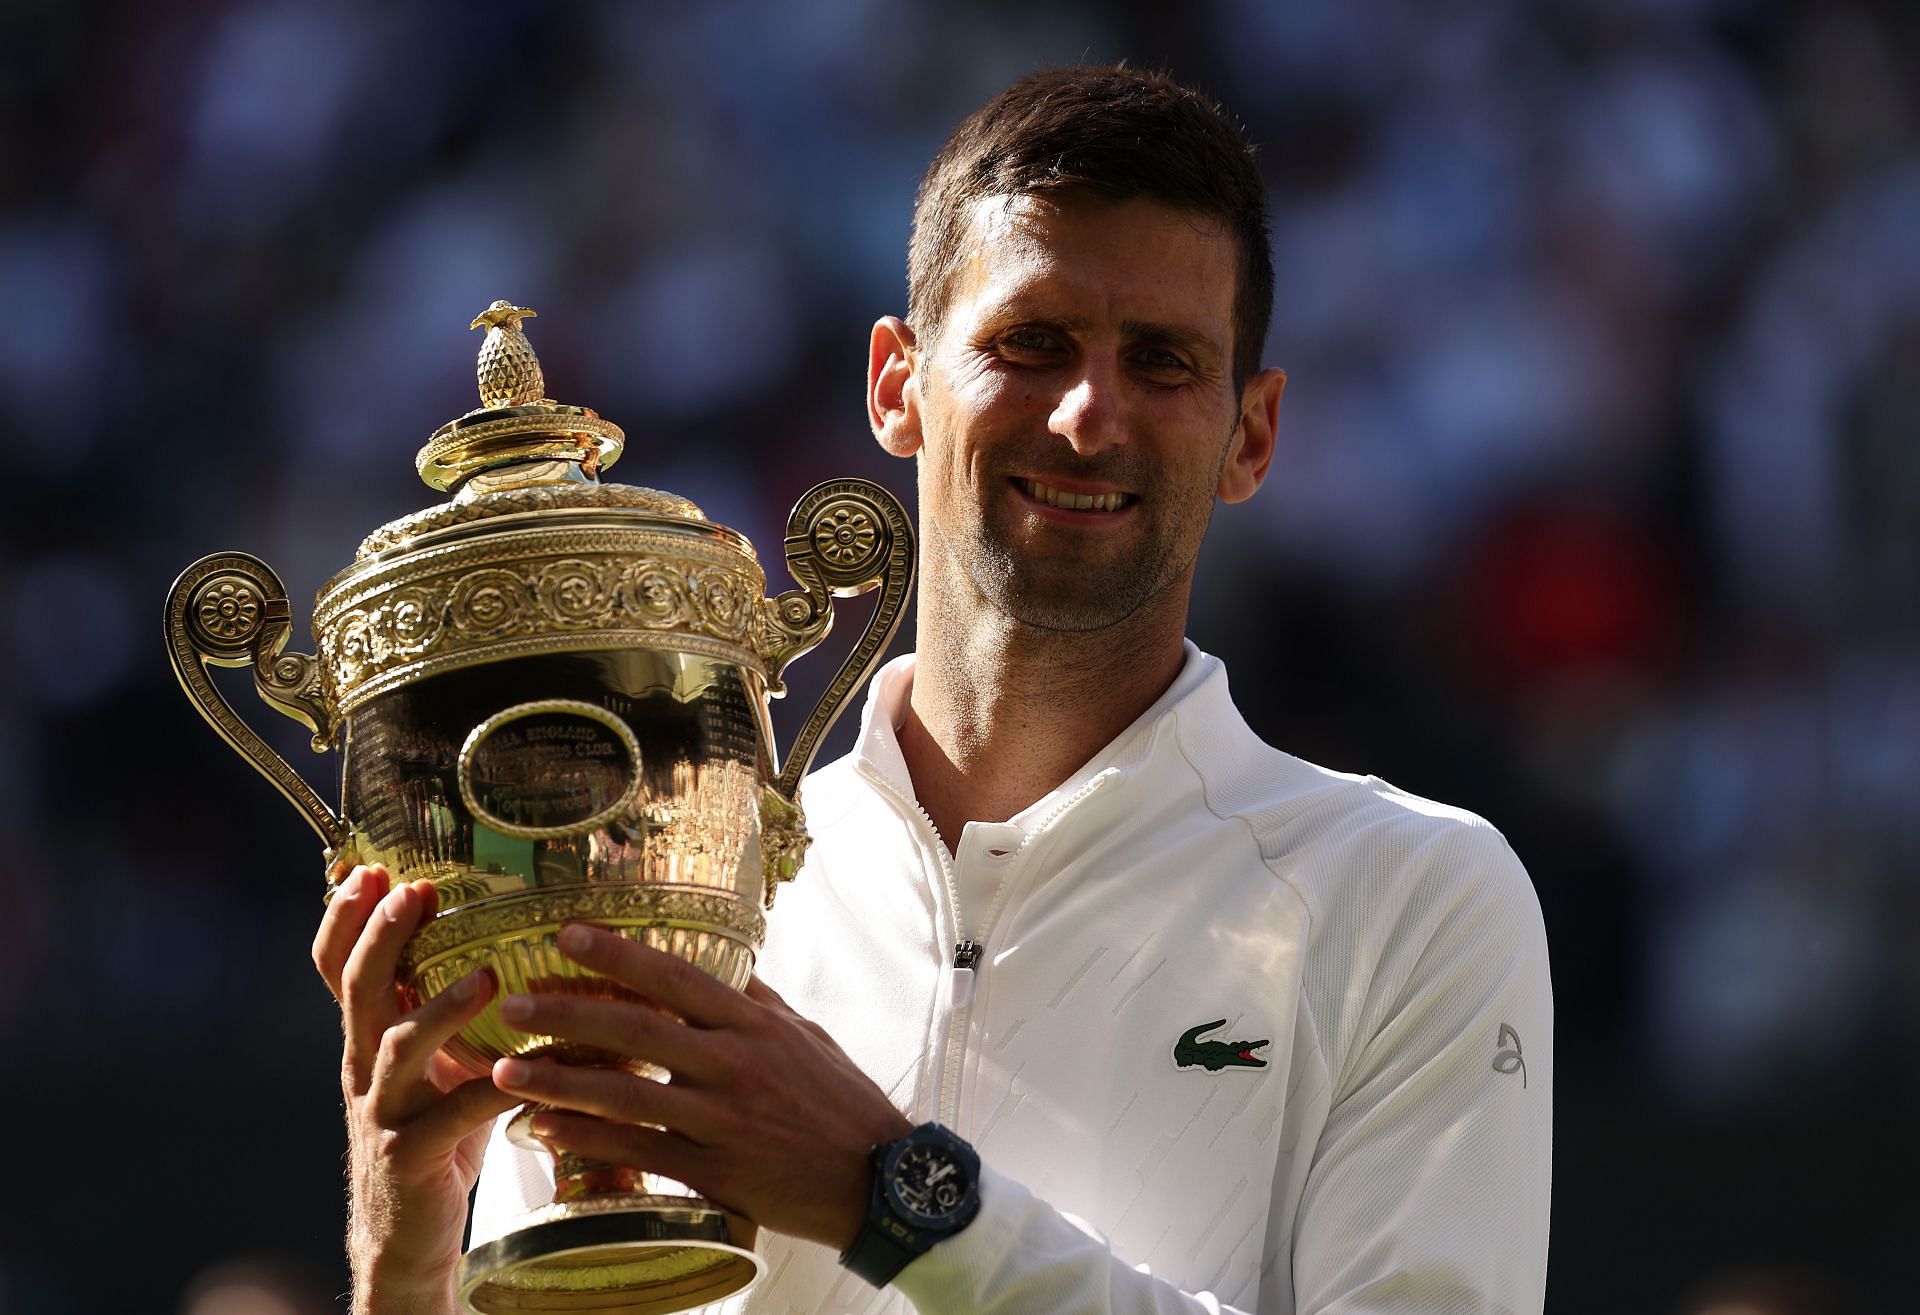 Novak Djokovic has won four titles so far in 2022 including Wimbledon